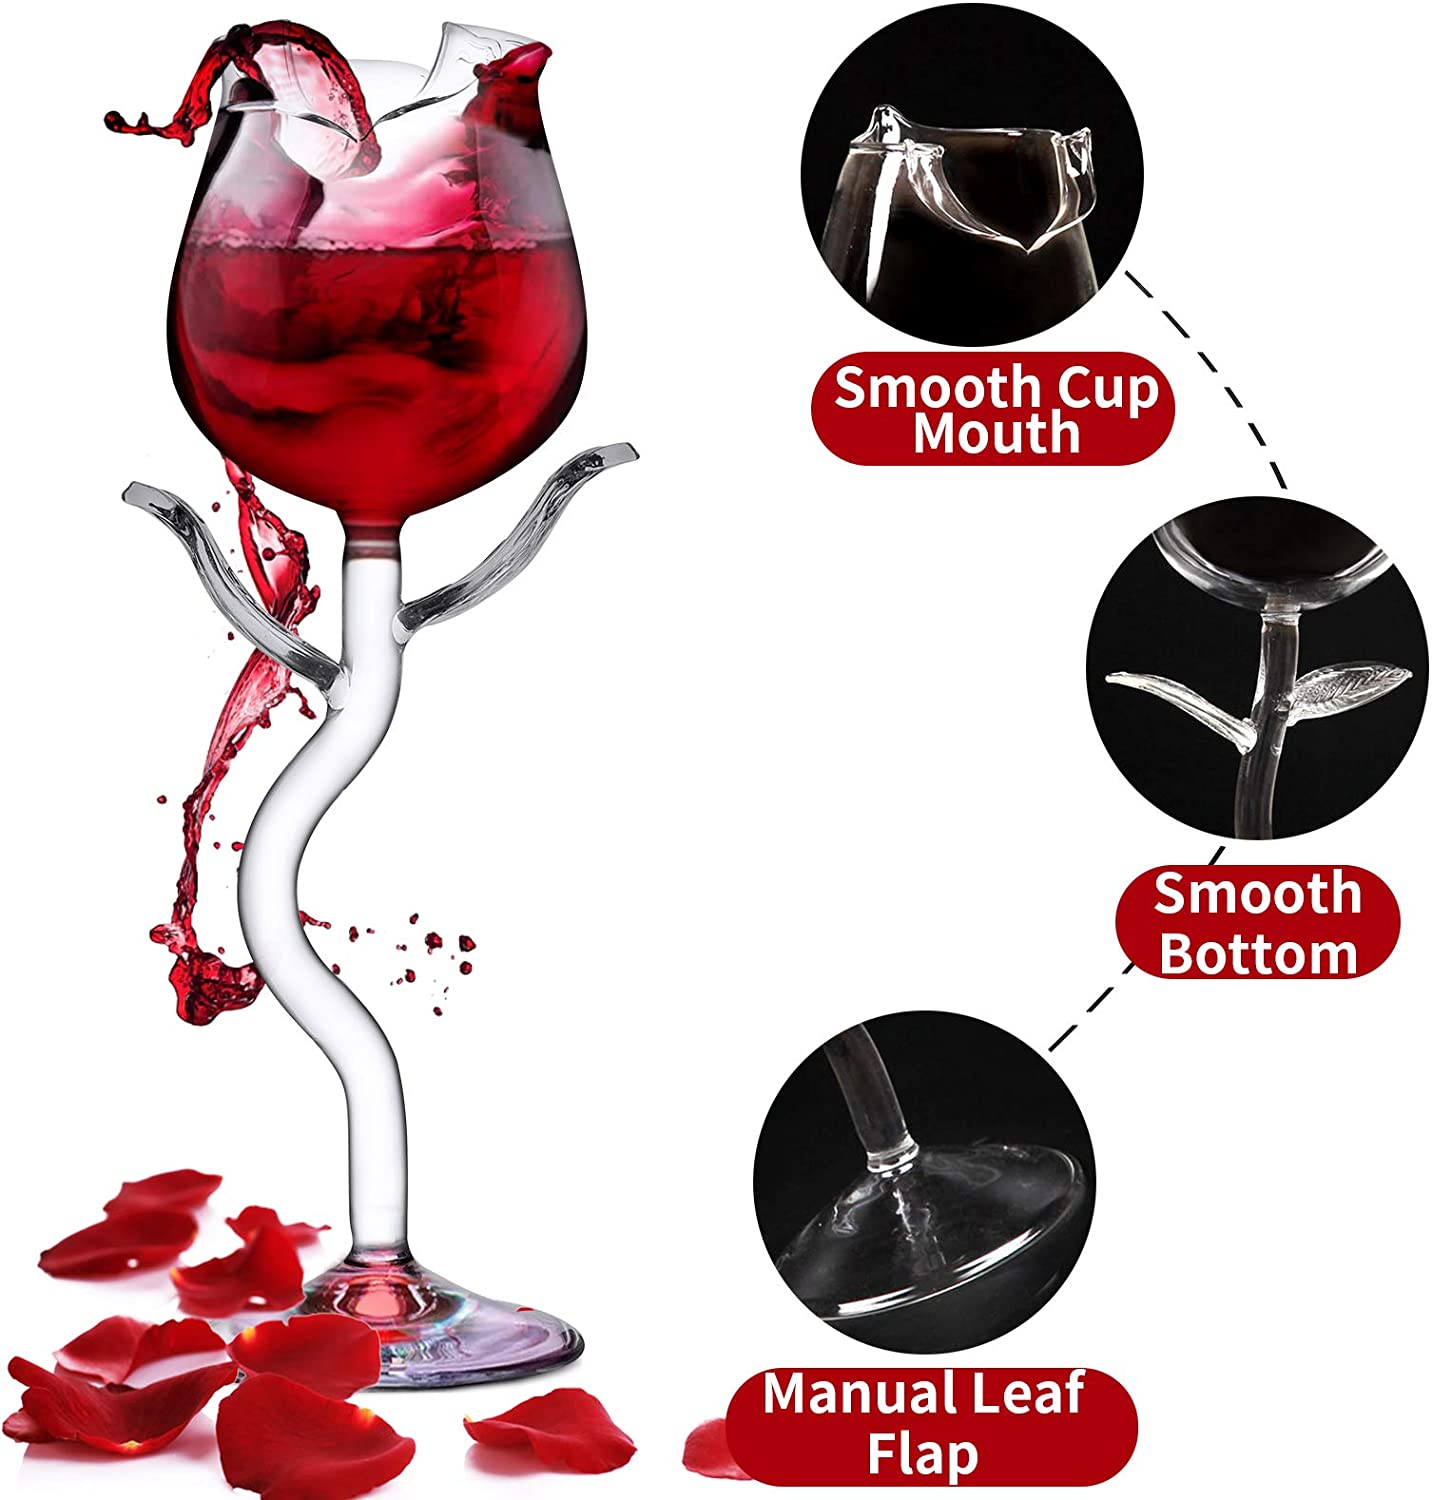 100ml Rose Flower Shape Wine Glass